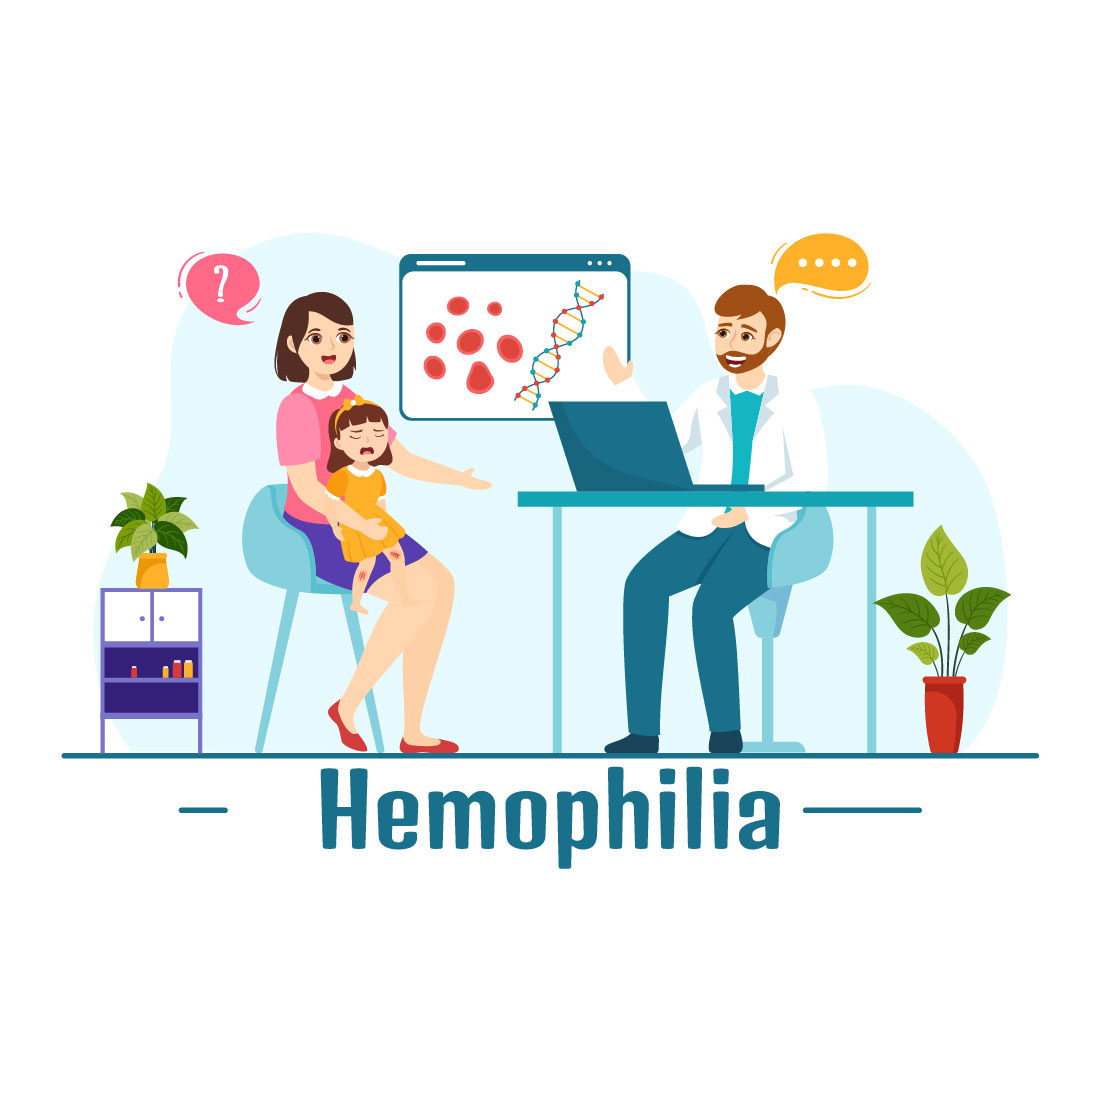 13 Hemophilia Disease Illustration preview image.